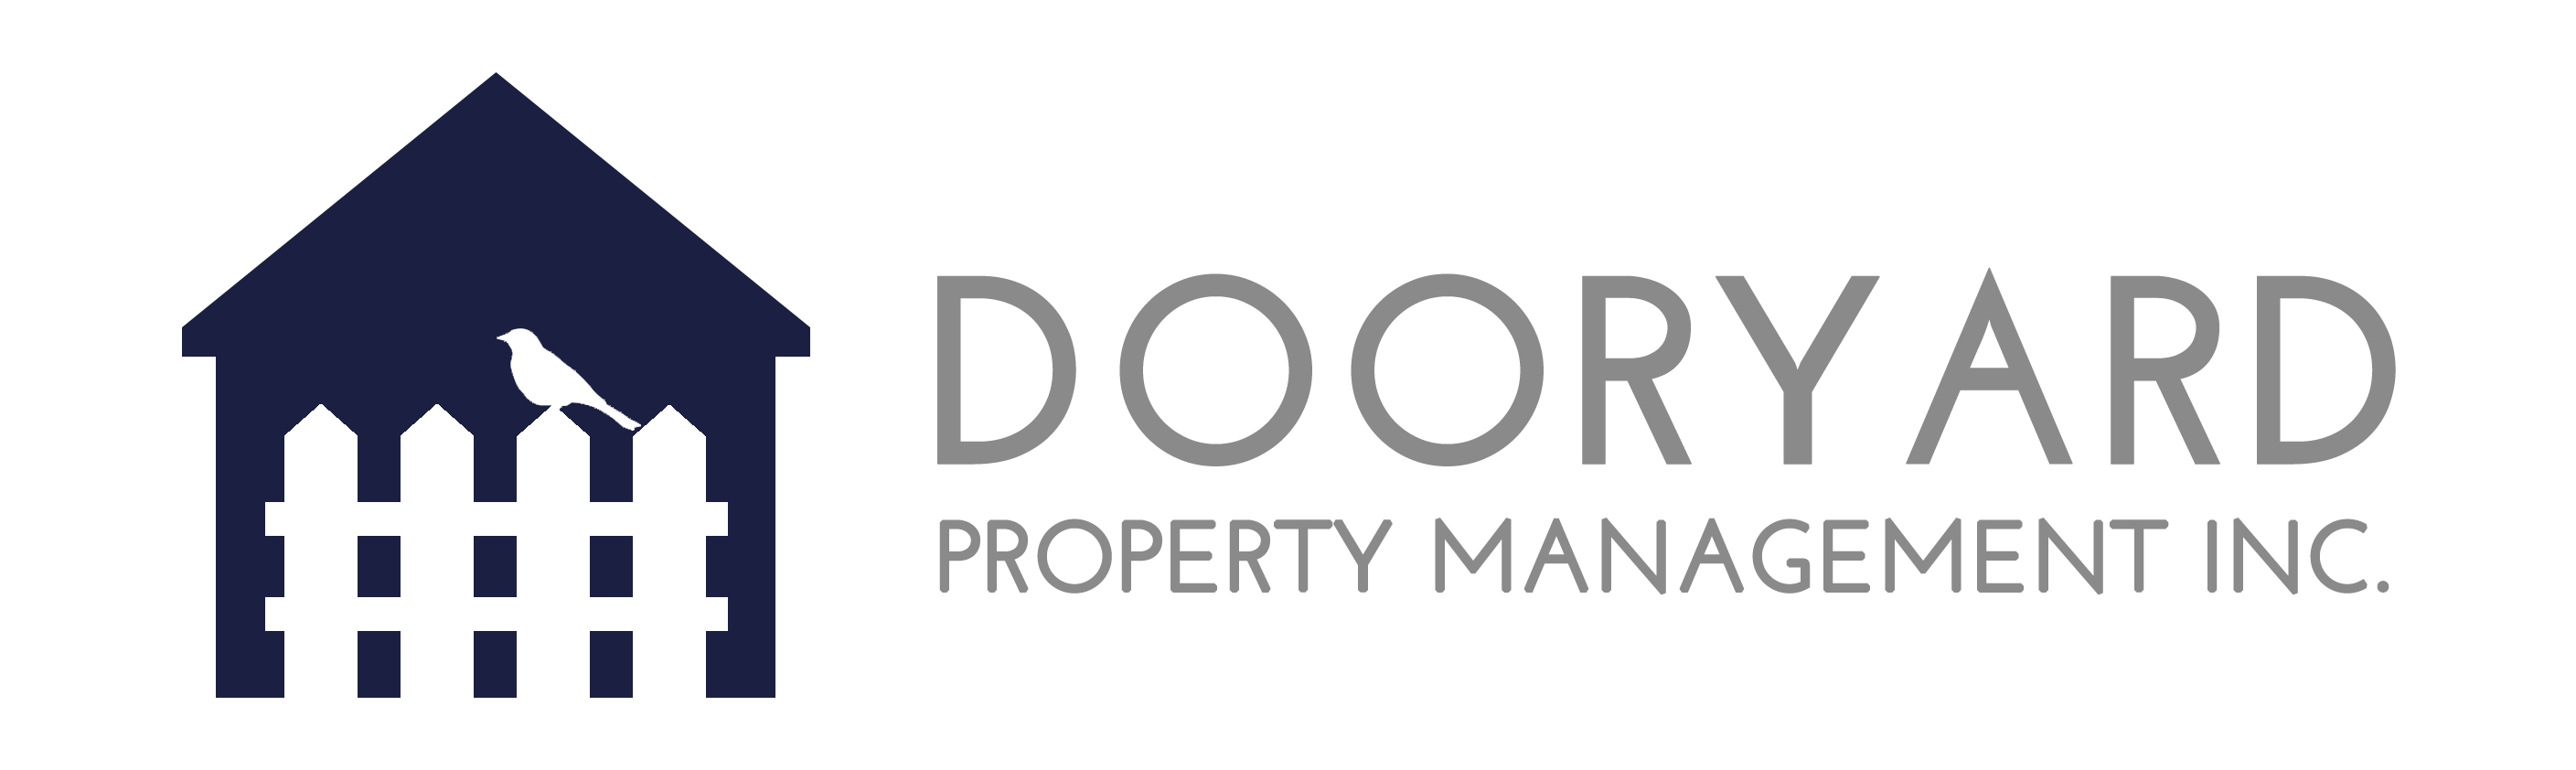 Dooryard Property Management